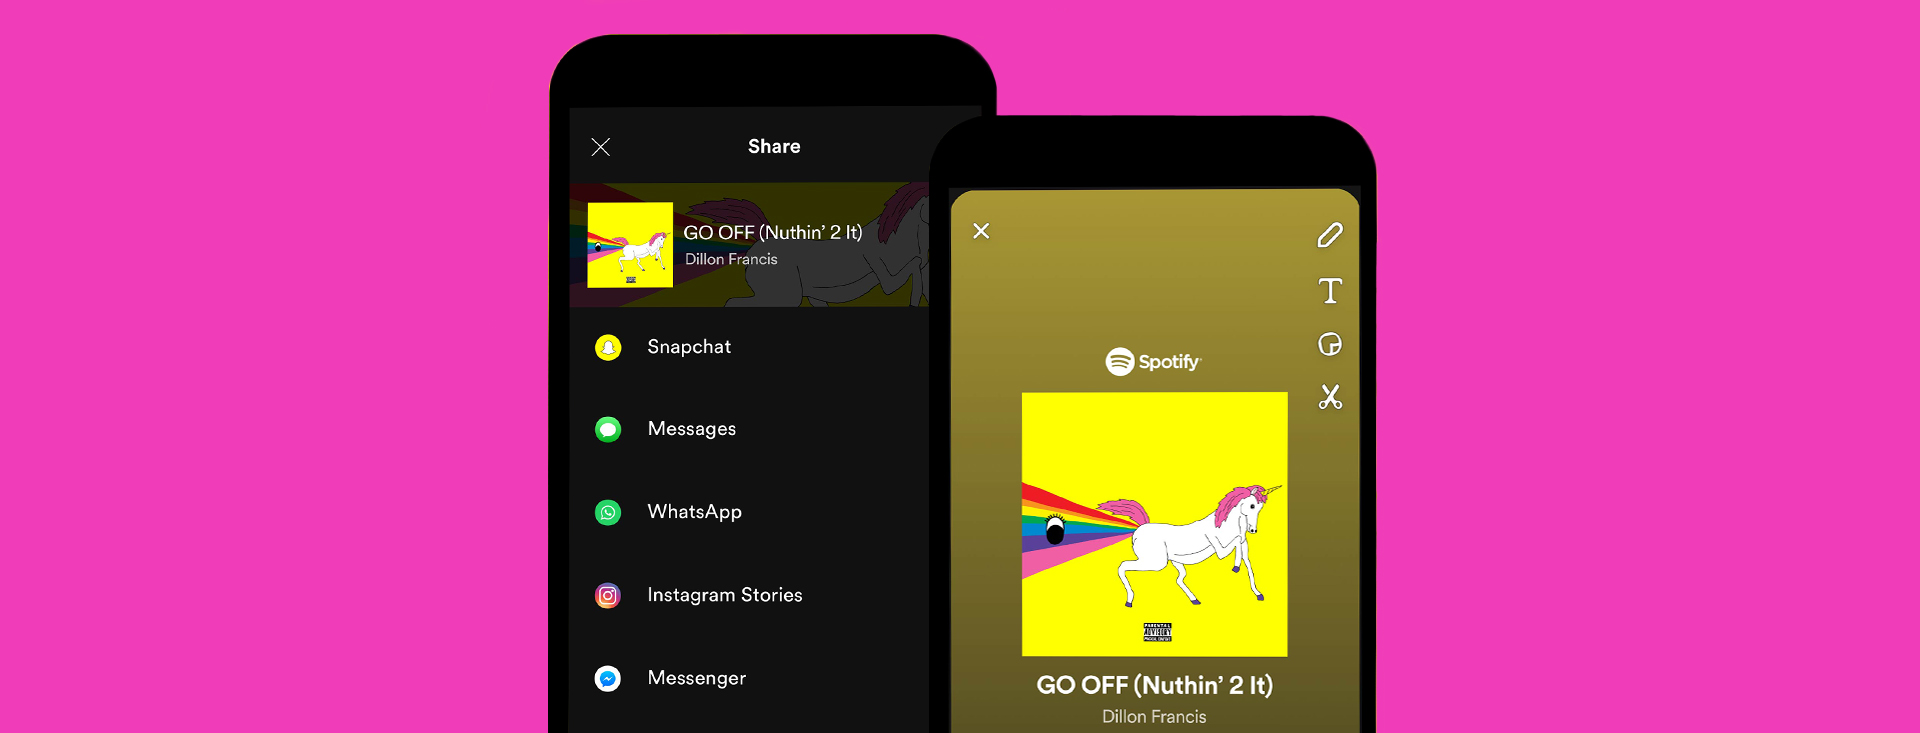 Spotify Mobile App Announcement